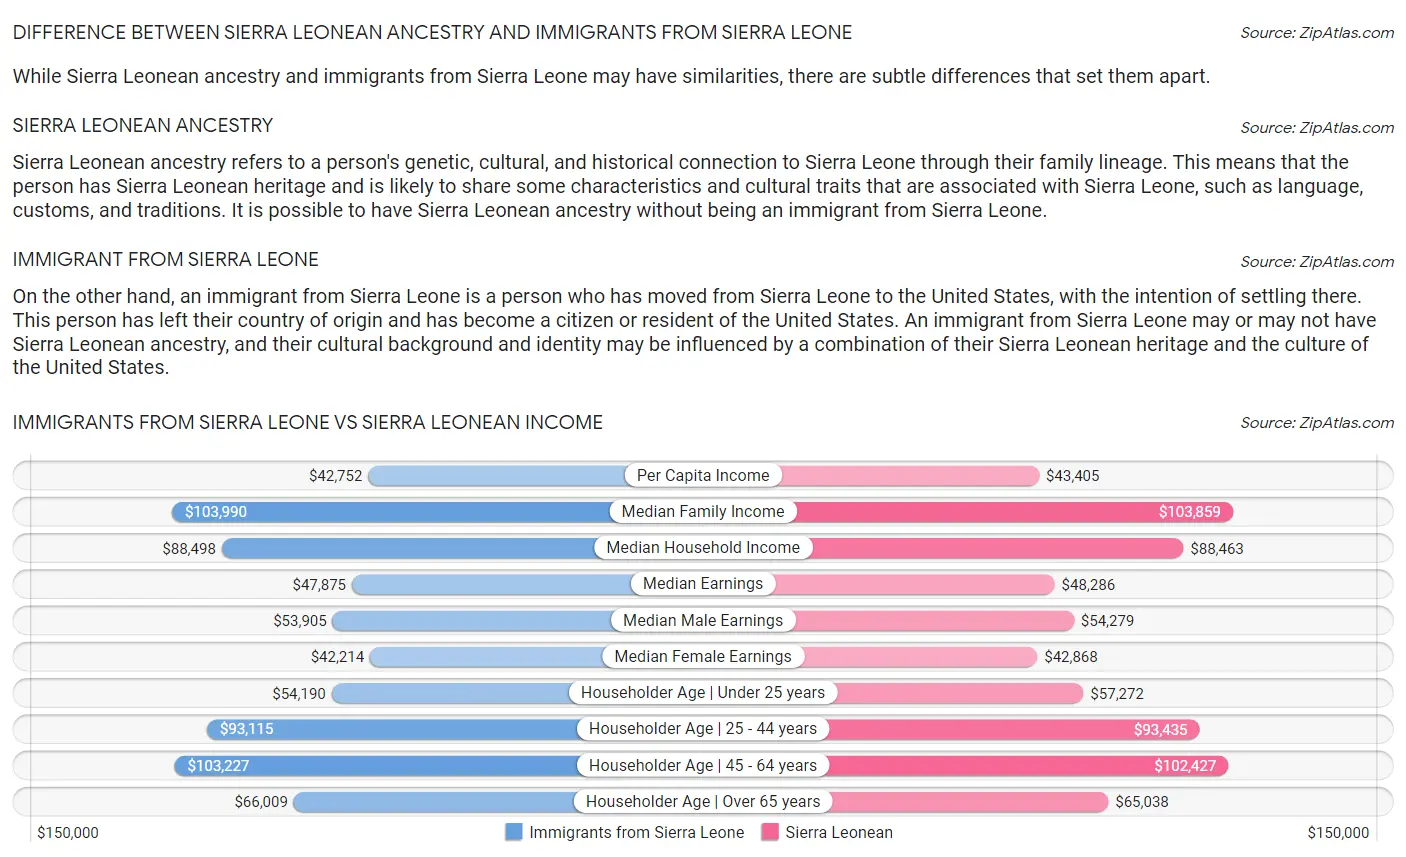 Immigrants from Sierra Leone vs Sierra Leonean Income